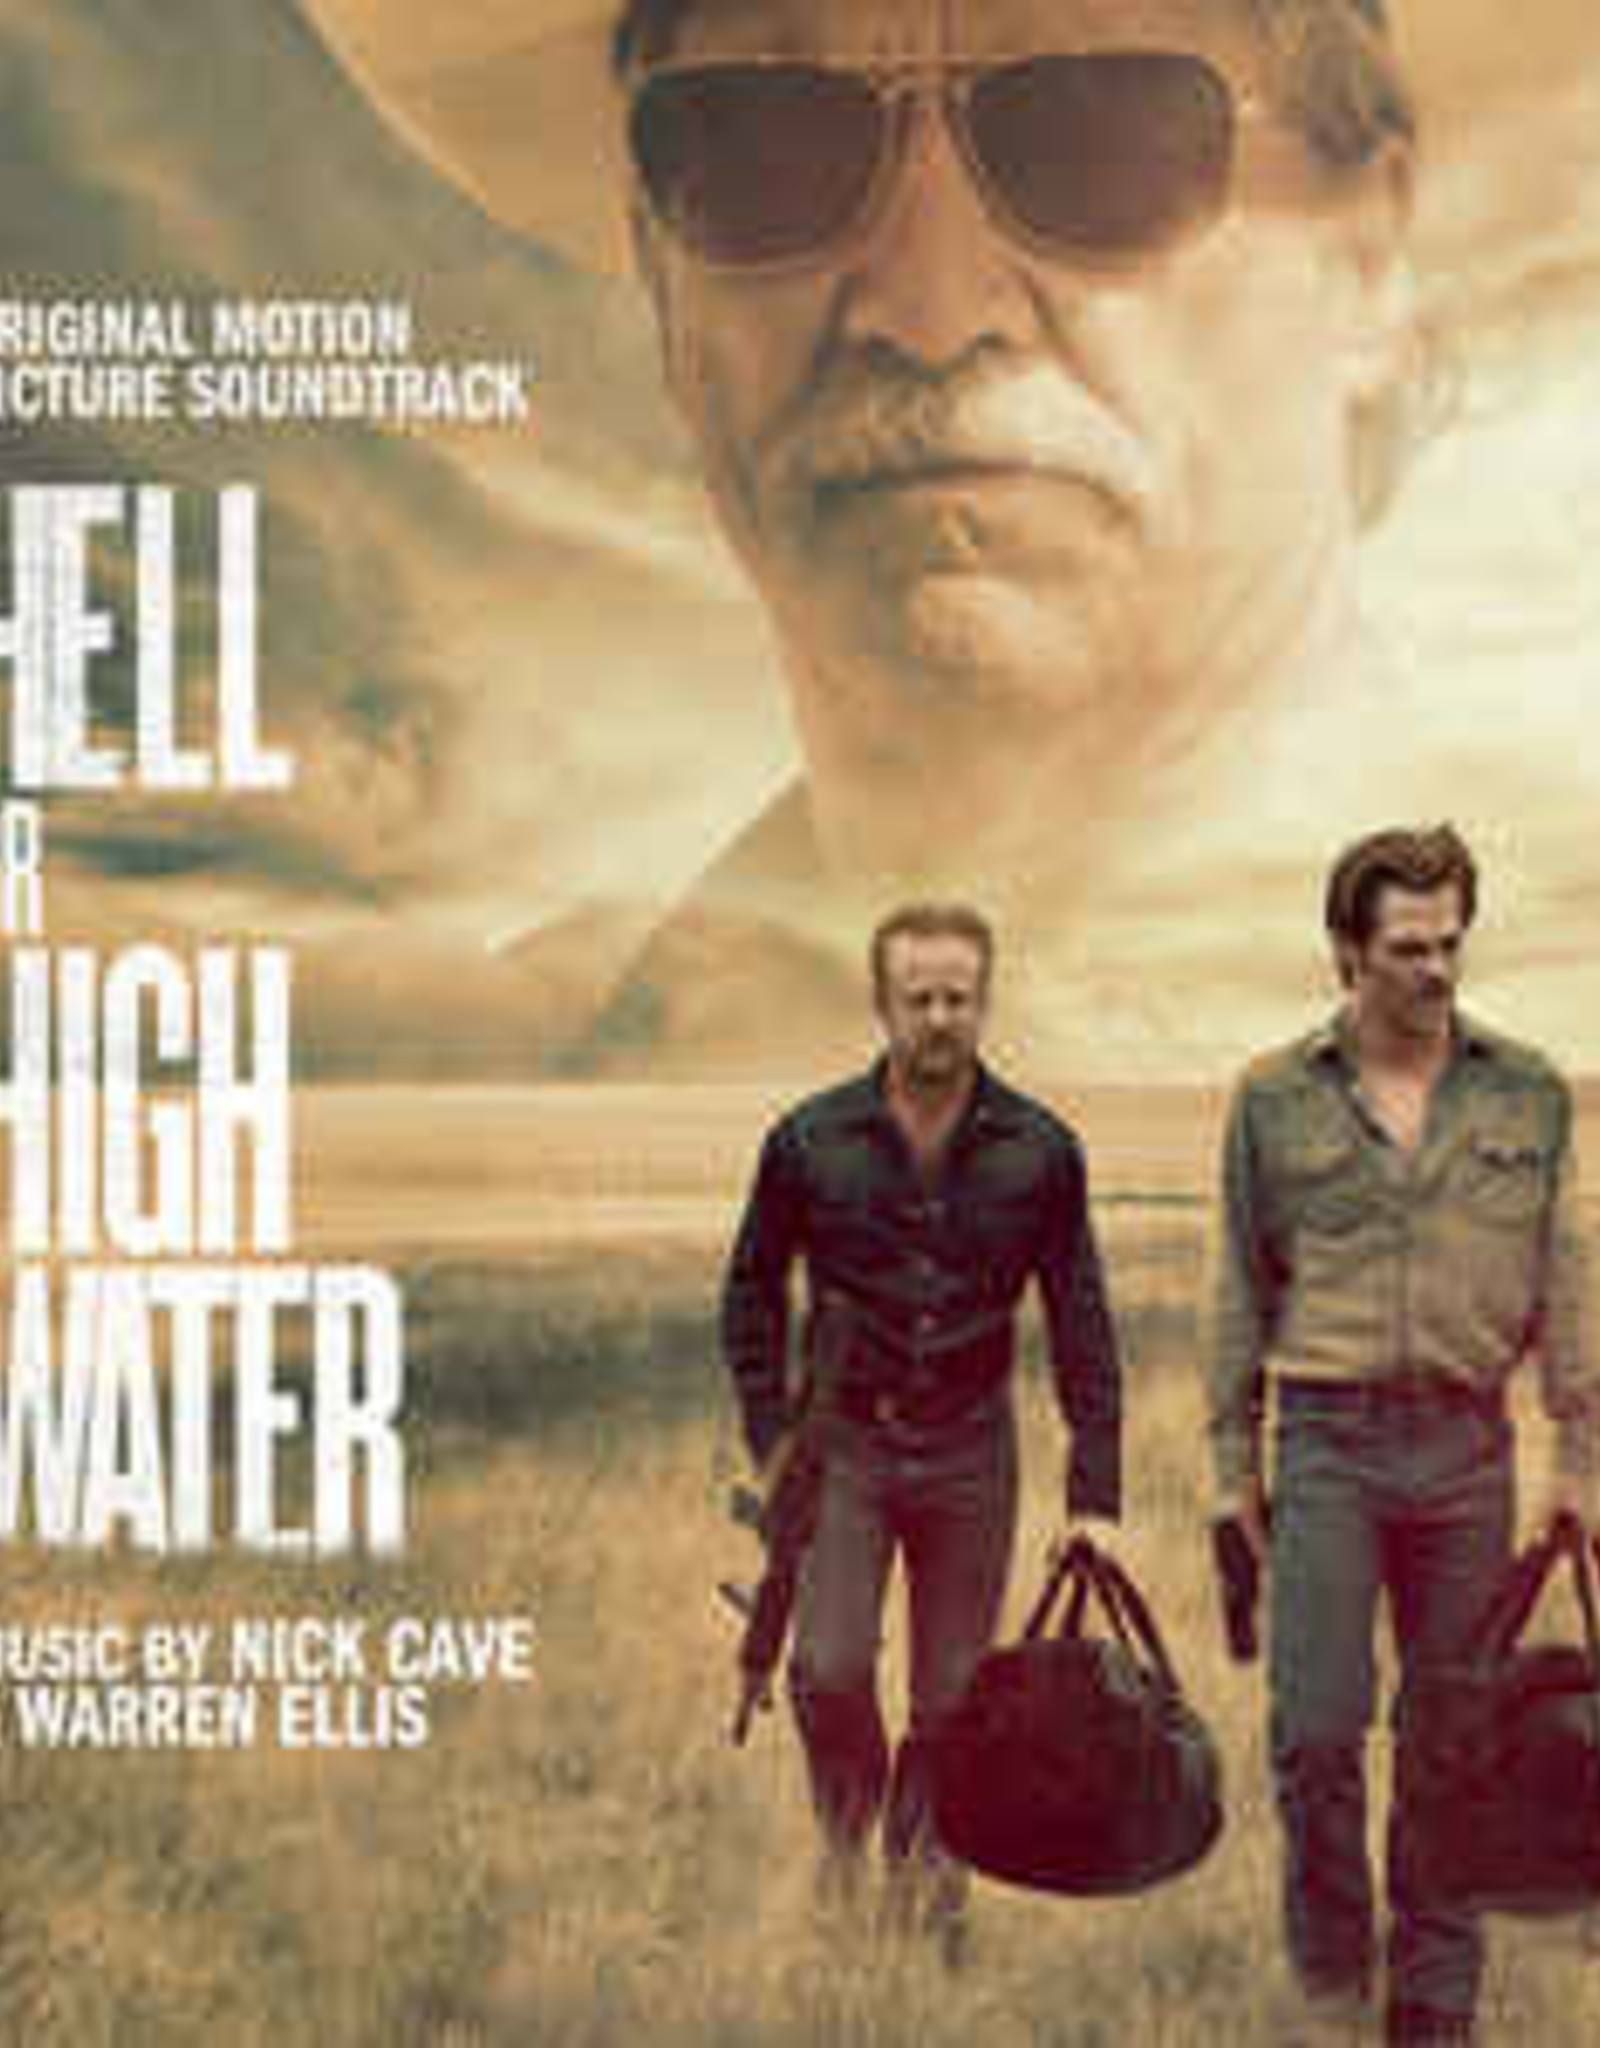 Nick Cave & Warren Ellis - Hell Or High Water (Original M